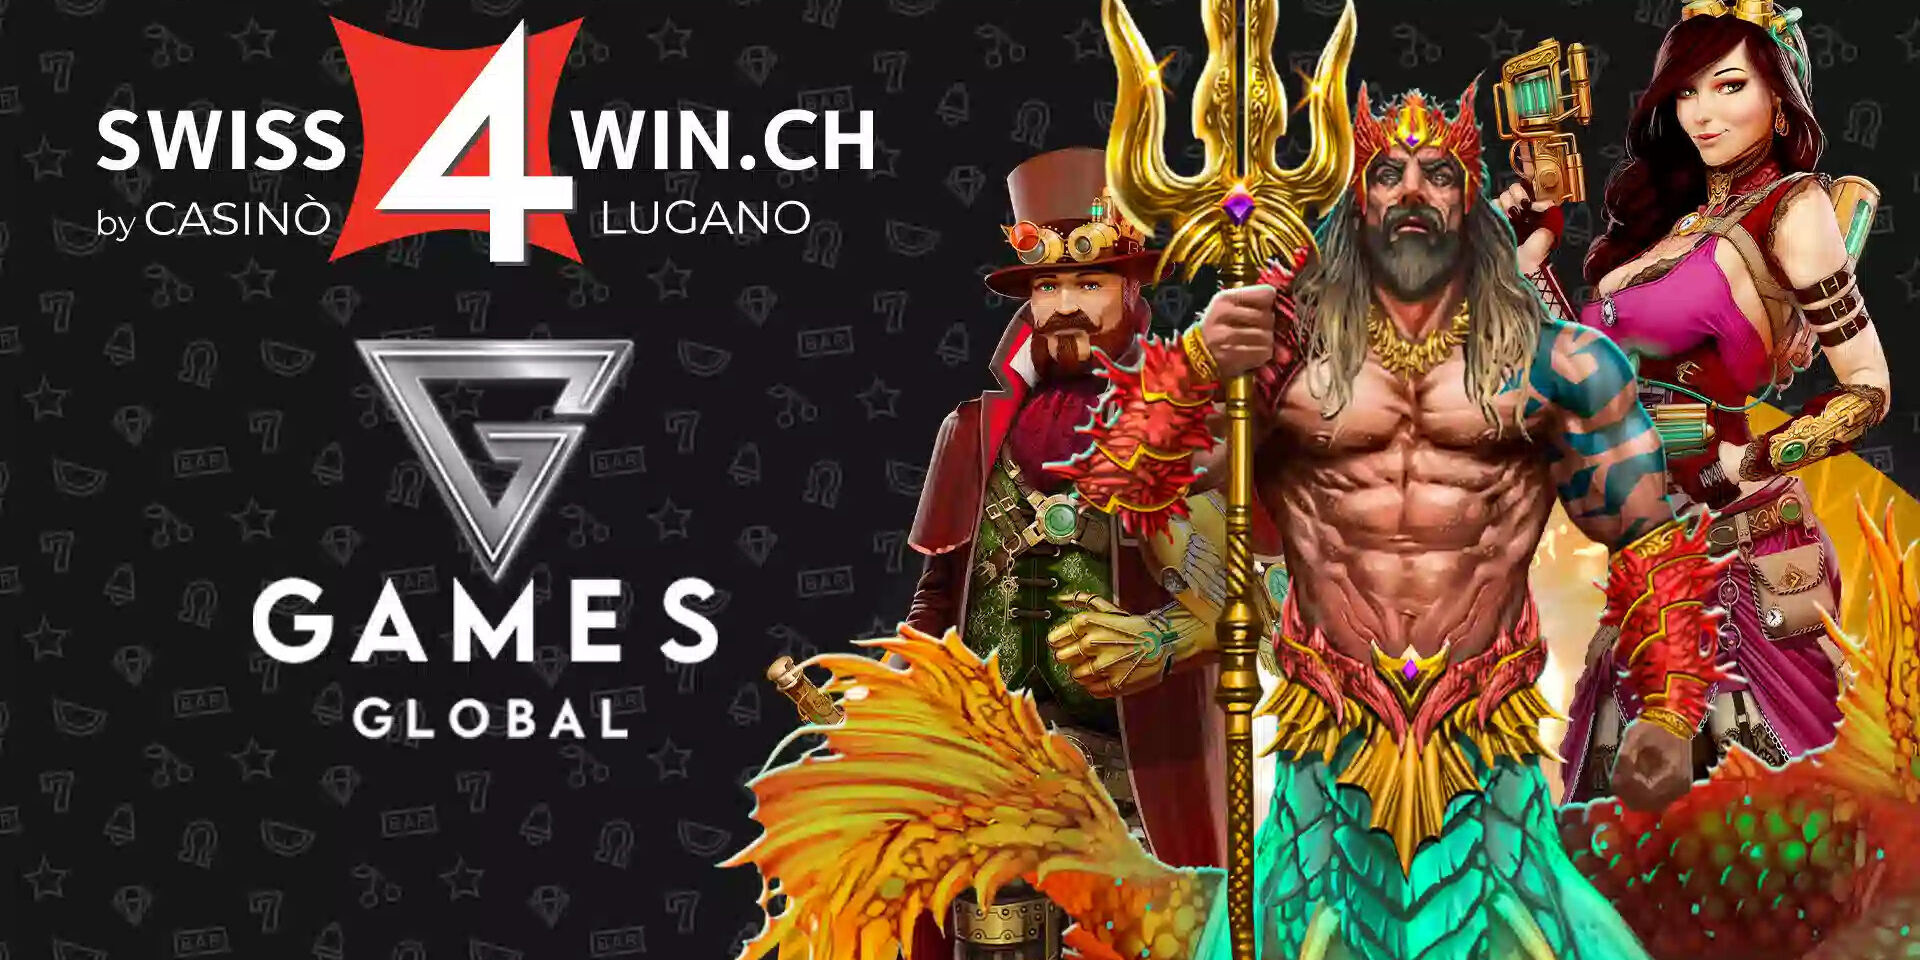 Swiss4Win.ch du Casino Lugano signe un partenariat avec Games Global